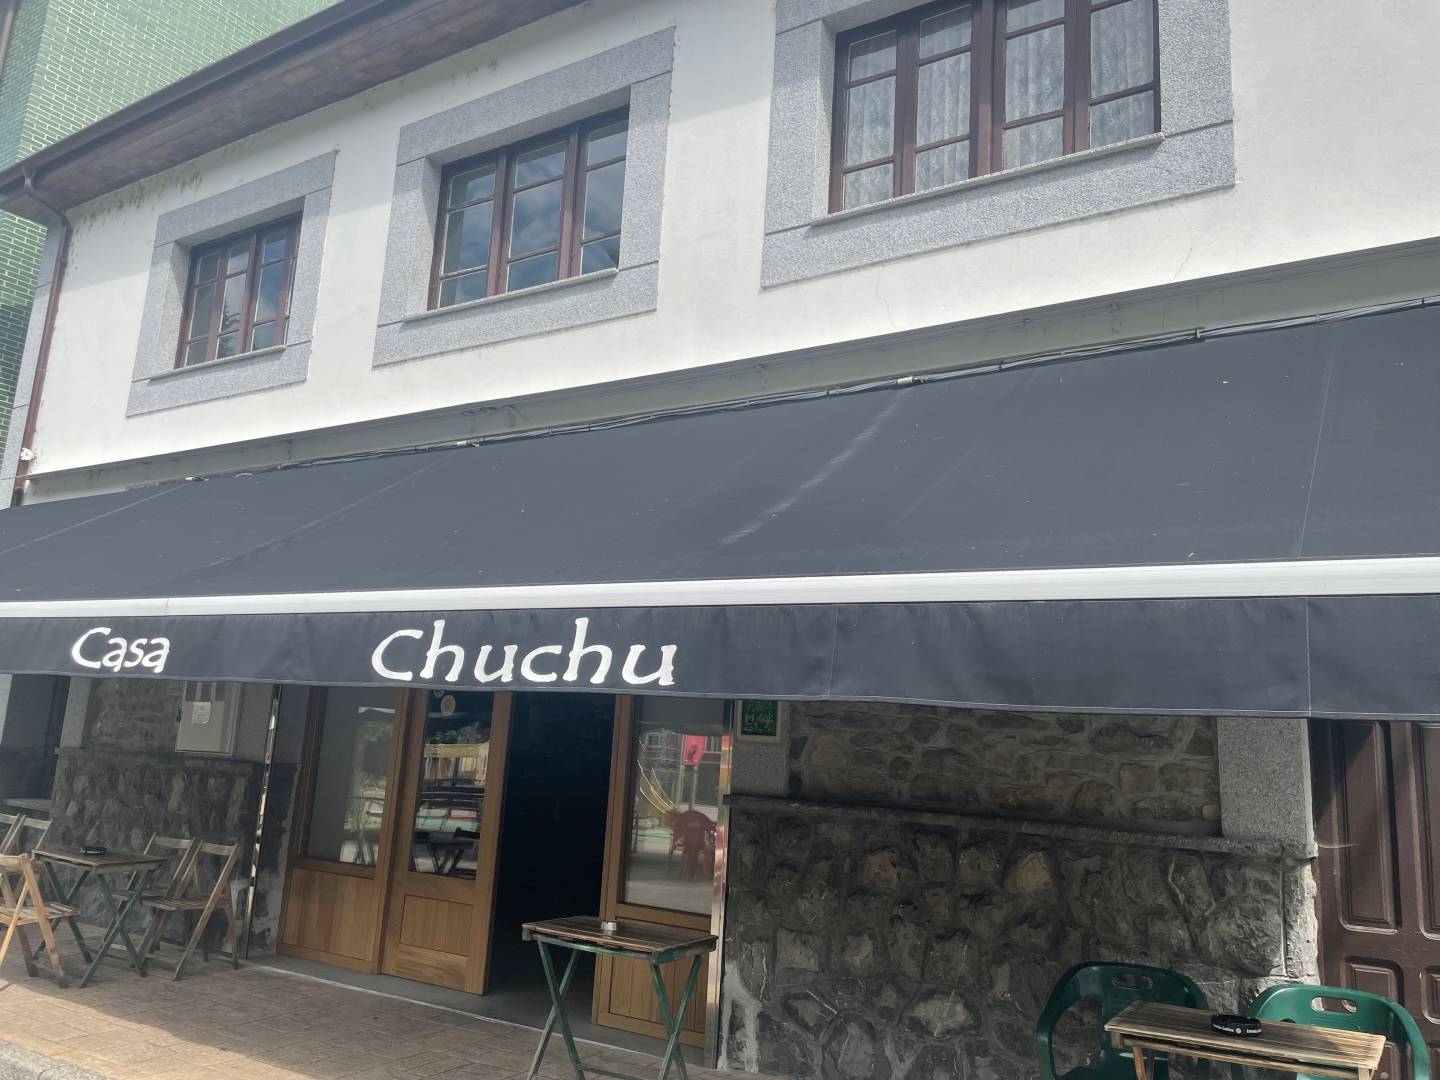 Casa chuchu